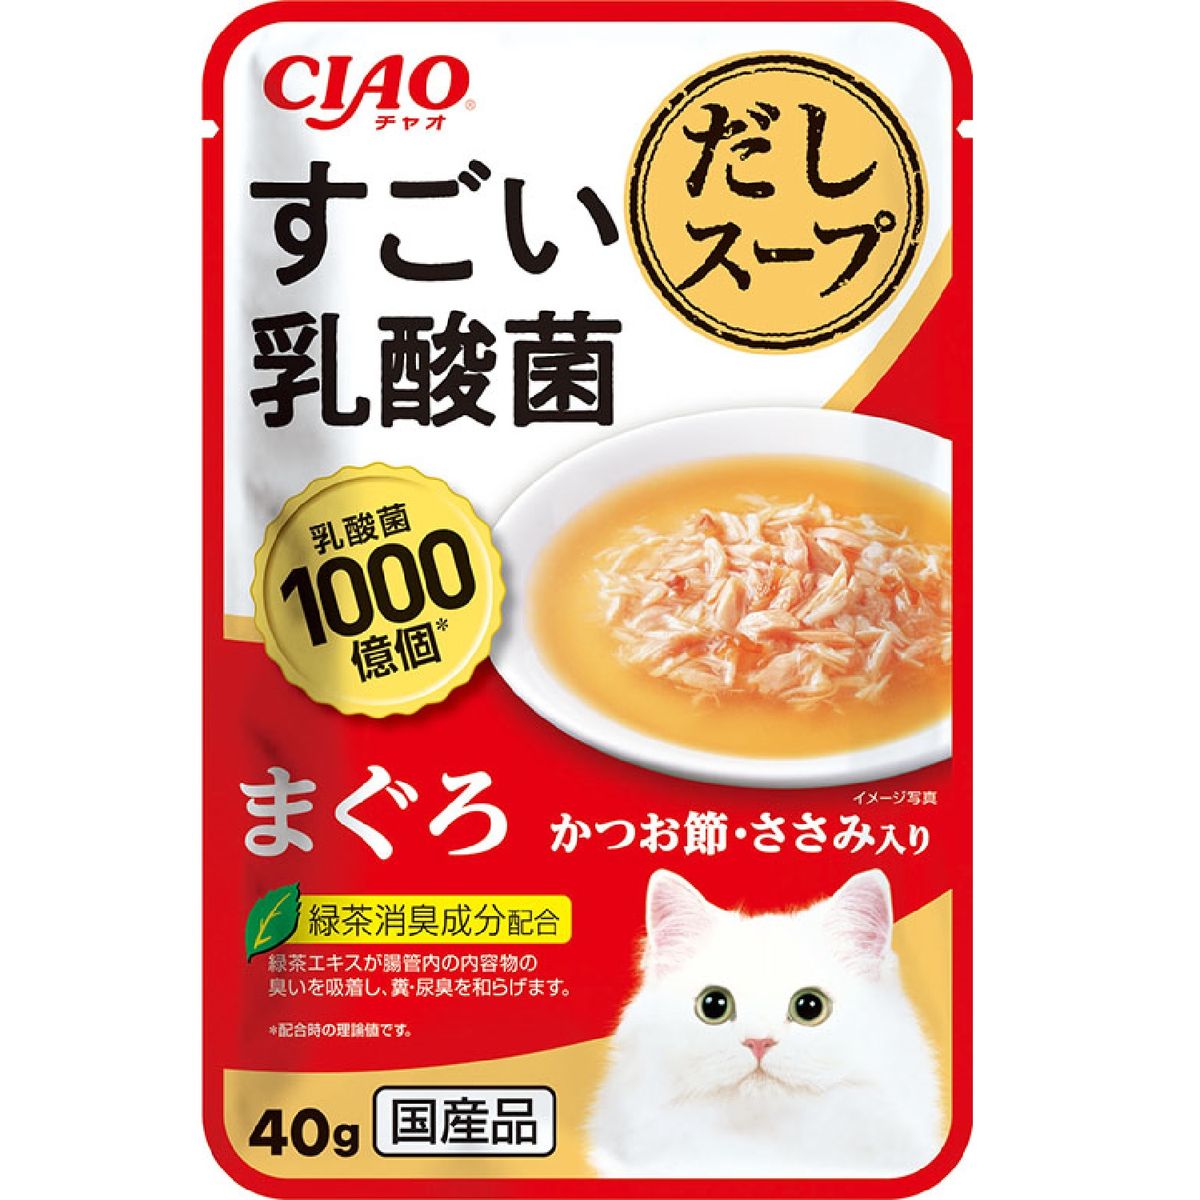 CIAOスゴイ乳酸菌ダシスープ マグロ カツオ節･ササミ入リ 40g×96